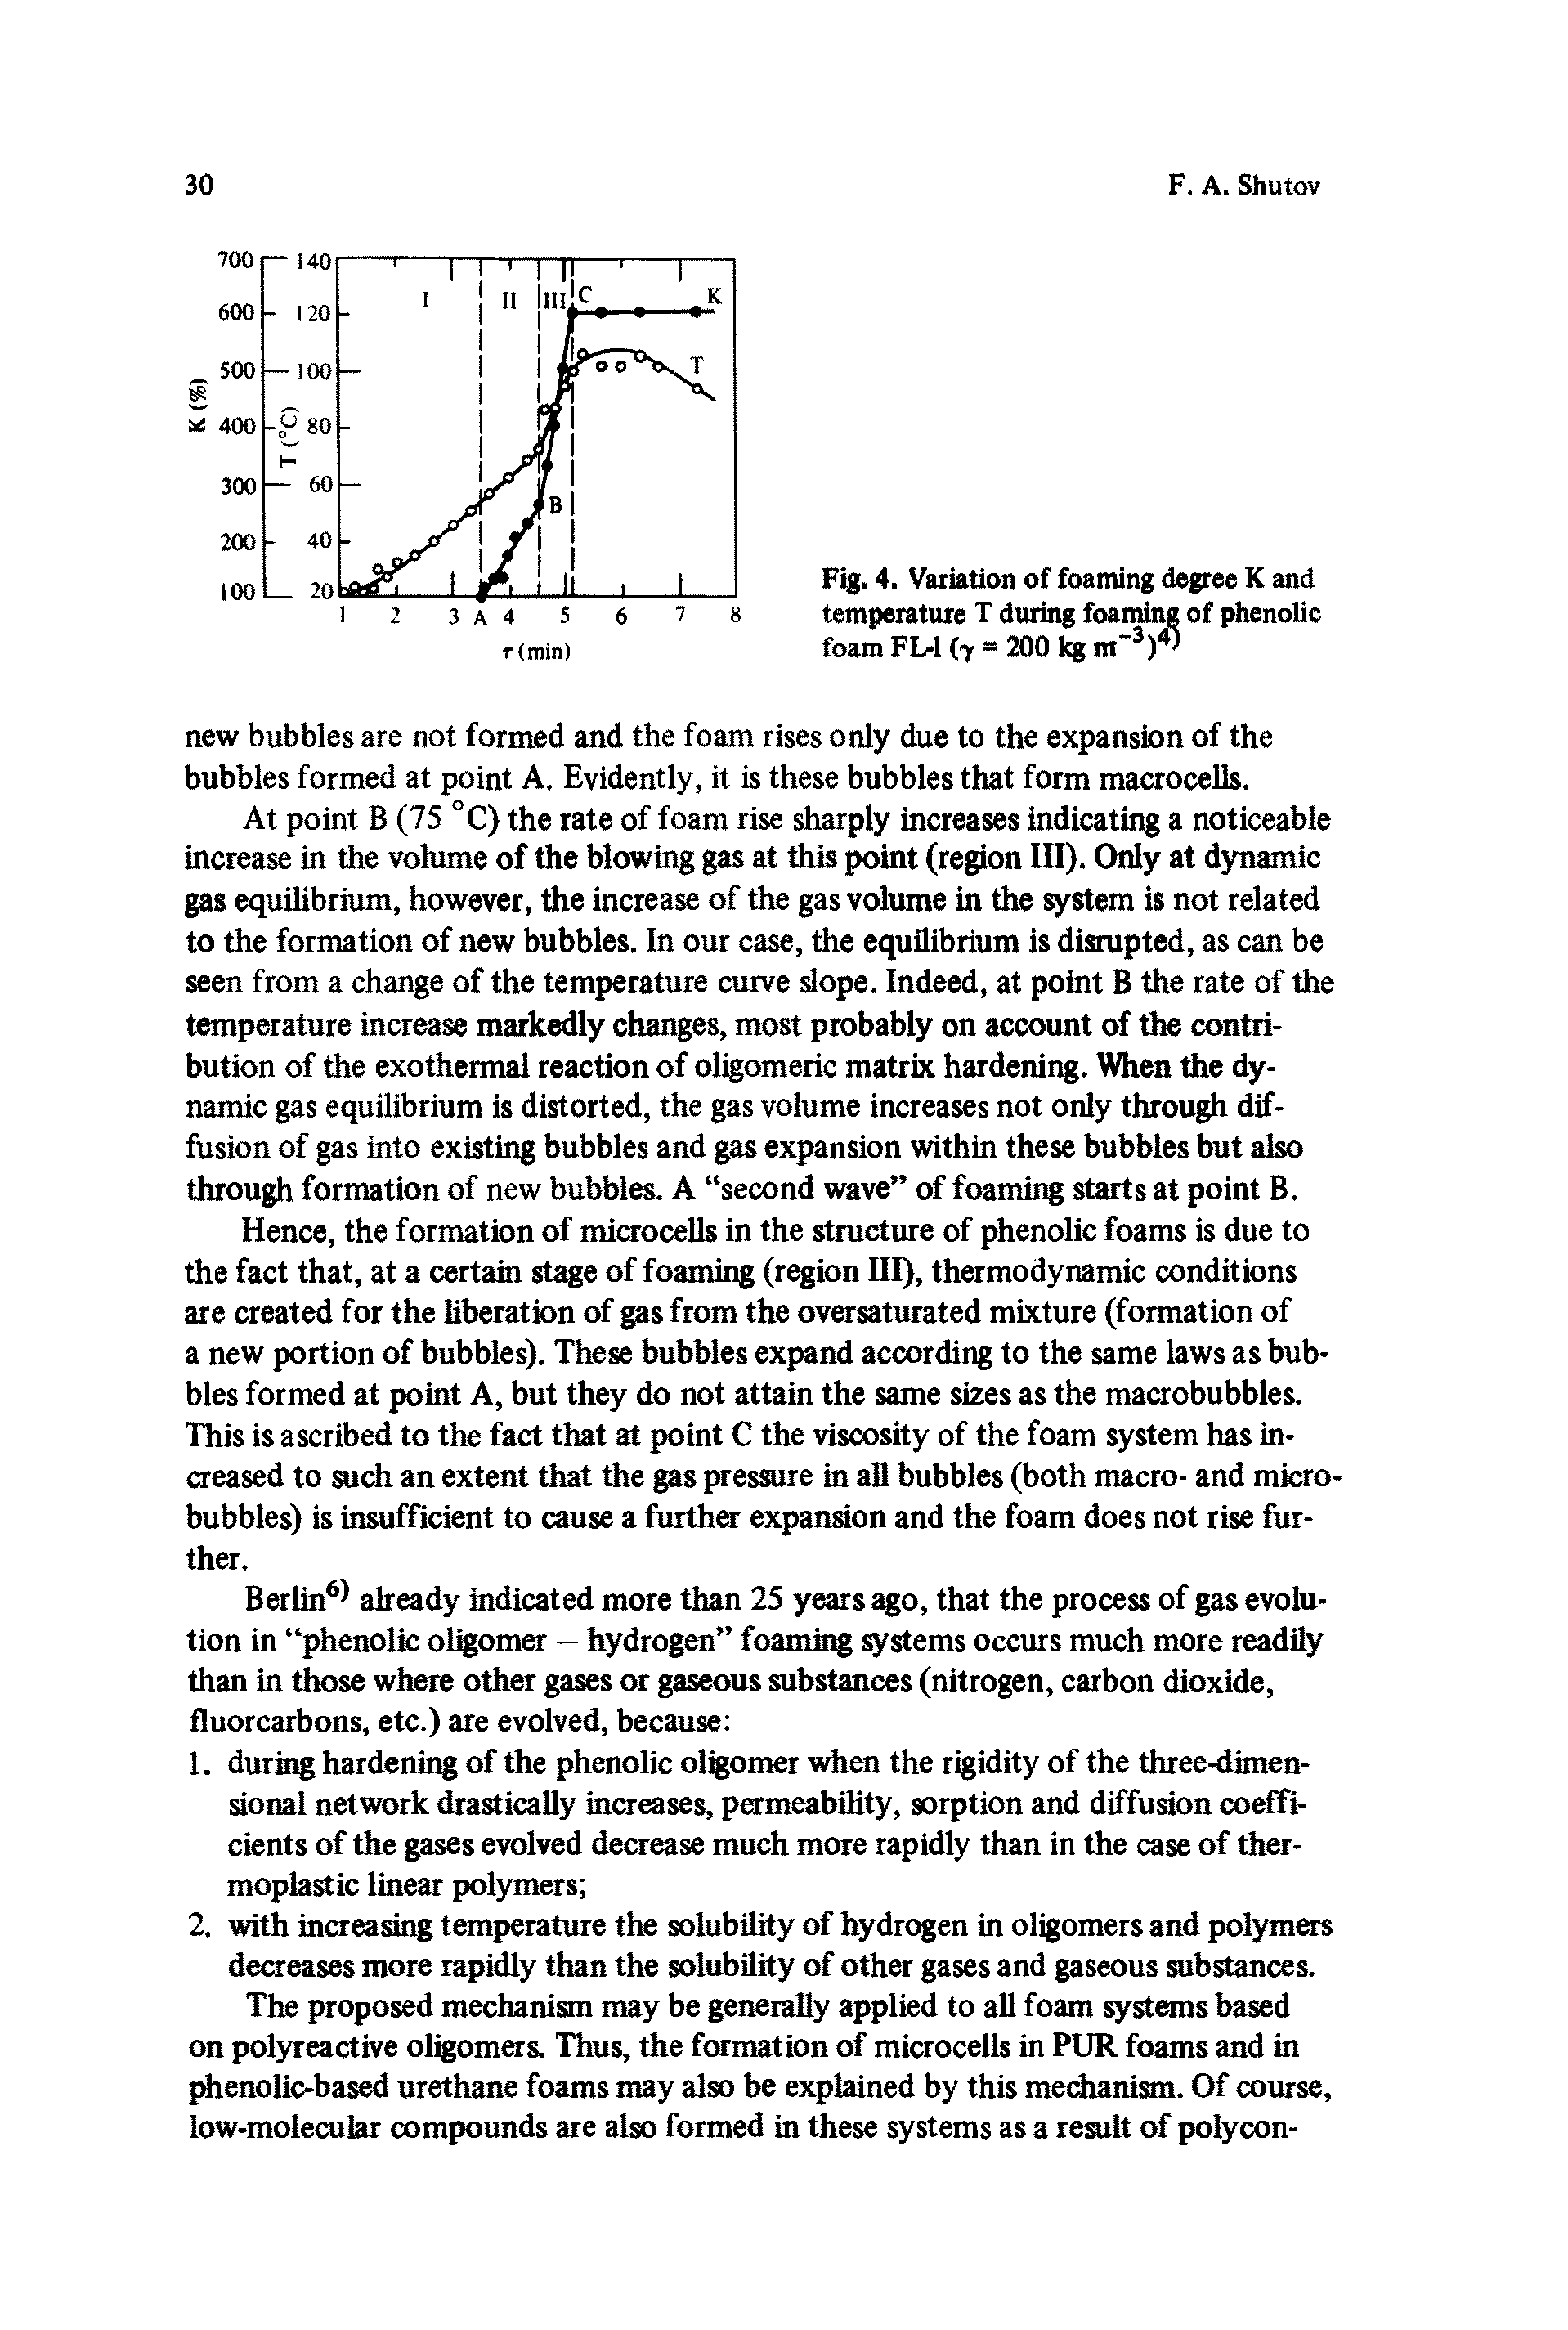 Fig. 4. Variation of foaming degree K and temperature T during foamitu of phenolic foam FL-1 (7 = 200 kg...